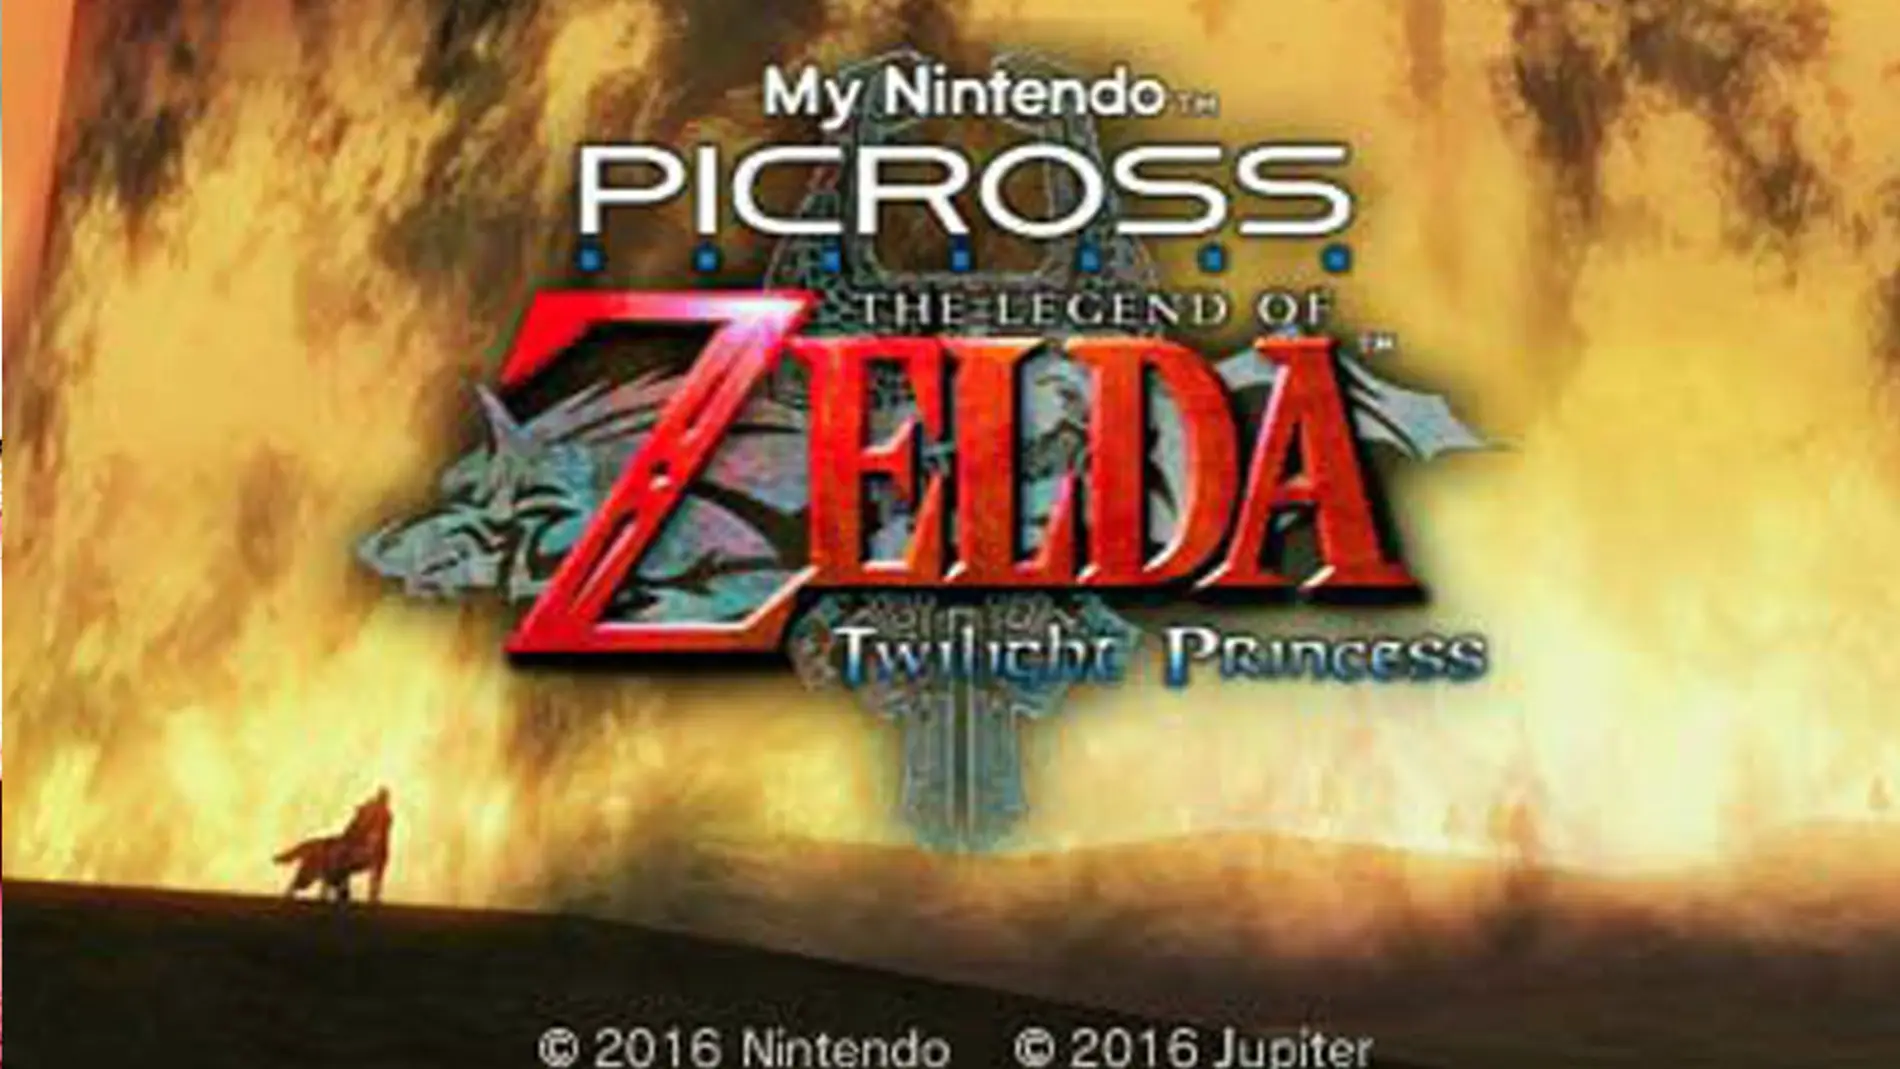 My Nintendo Picross The Legend Zelda: Twilight Princess llegará mes a 3DS